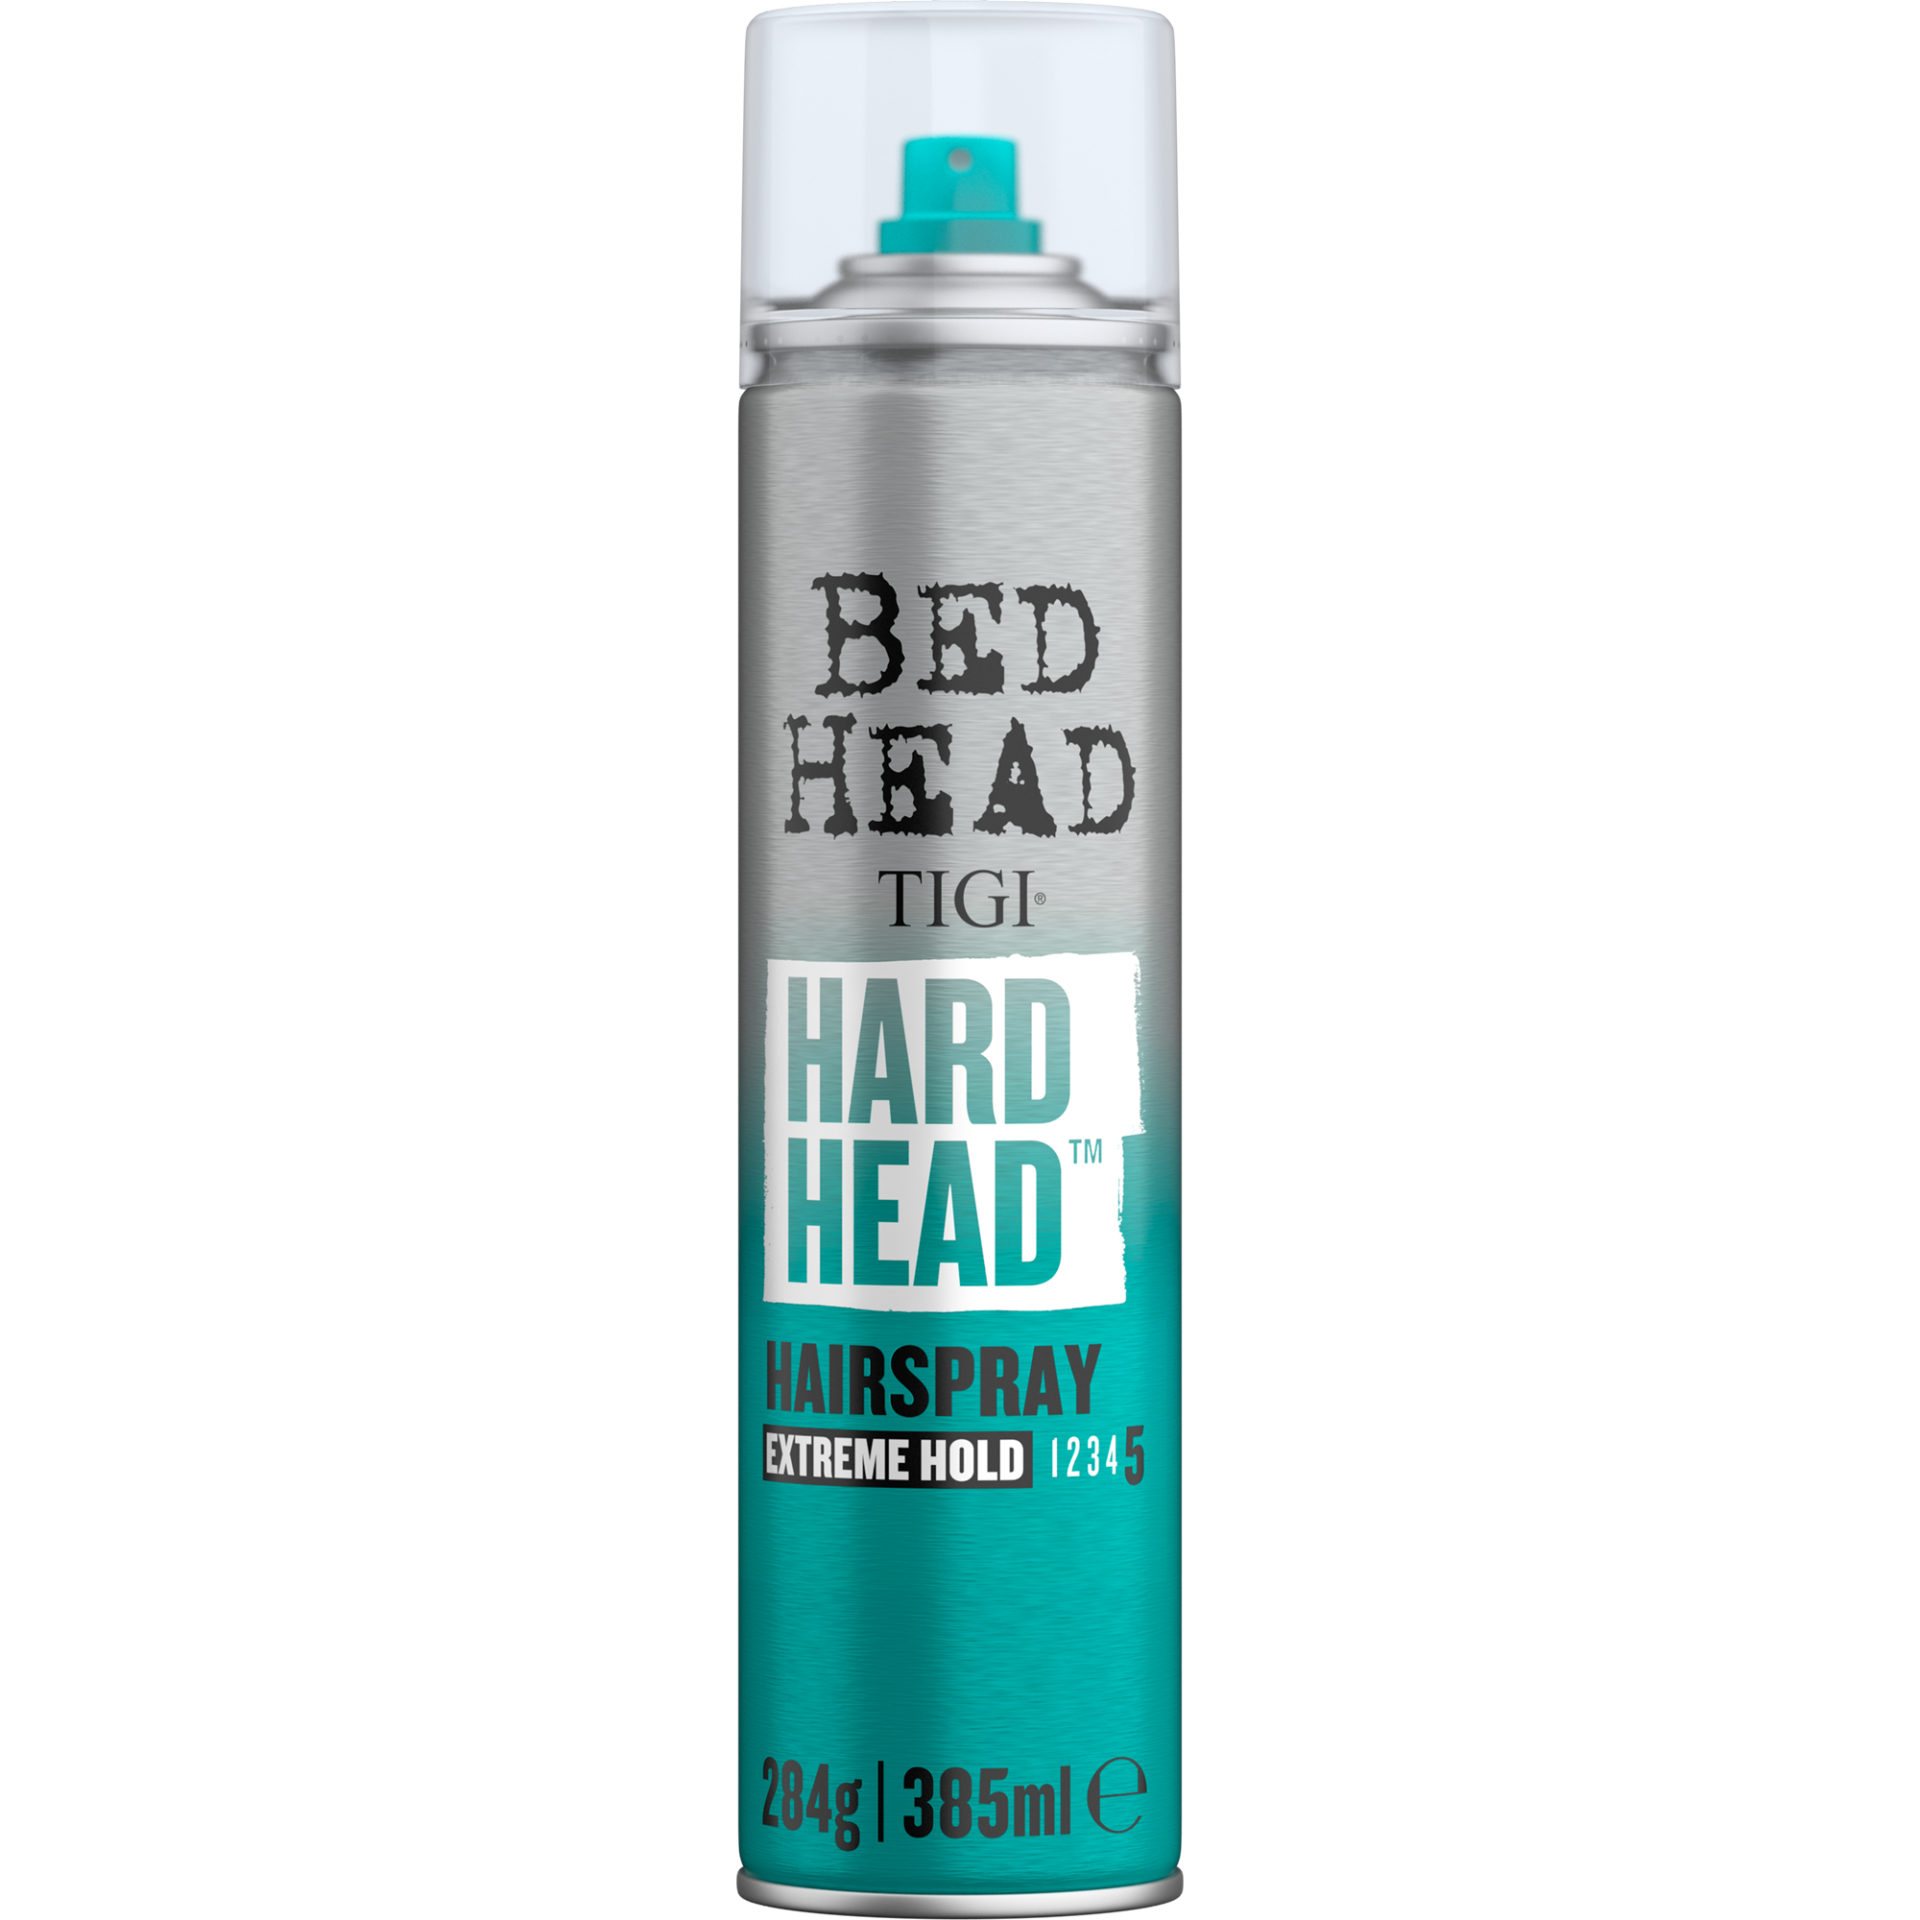 Tigi Bh Hard Head Hairspray Shop Rigatophair